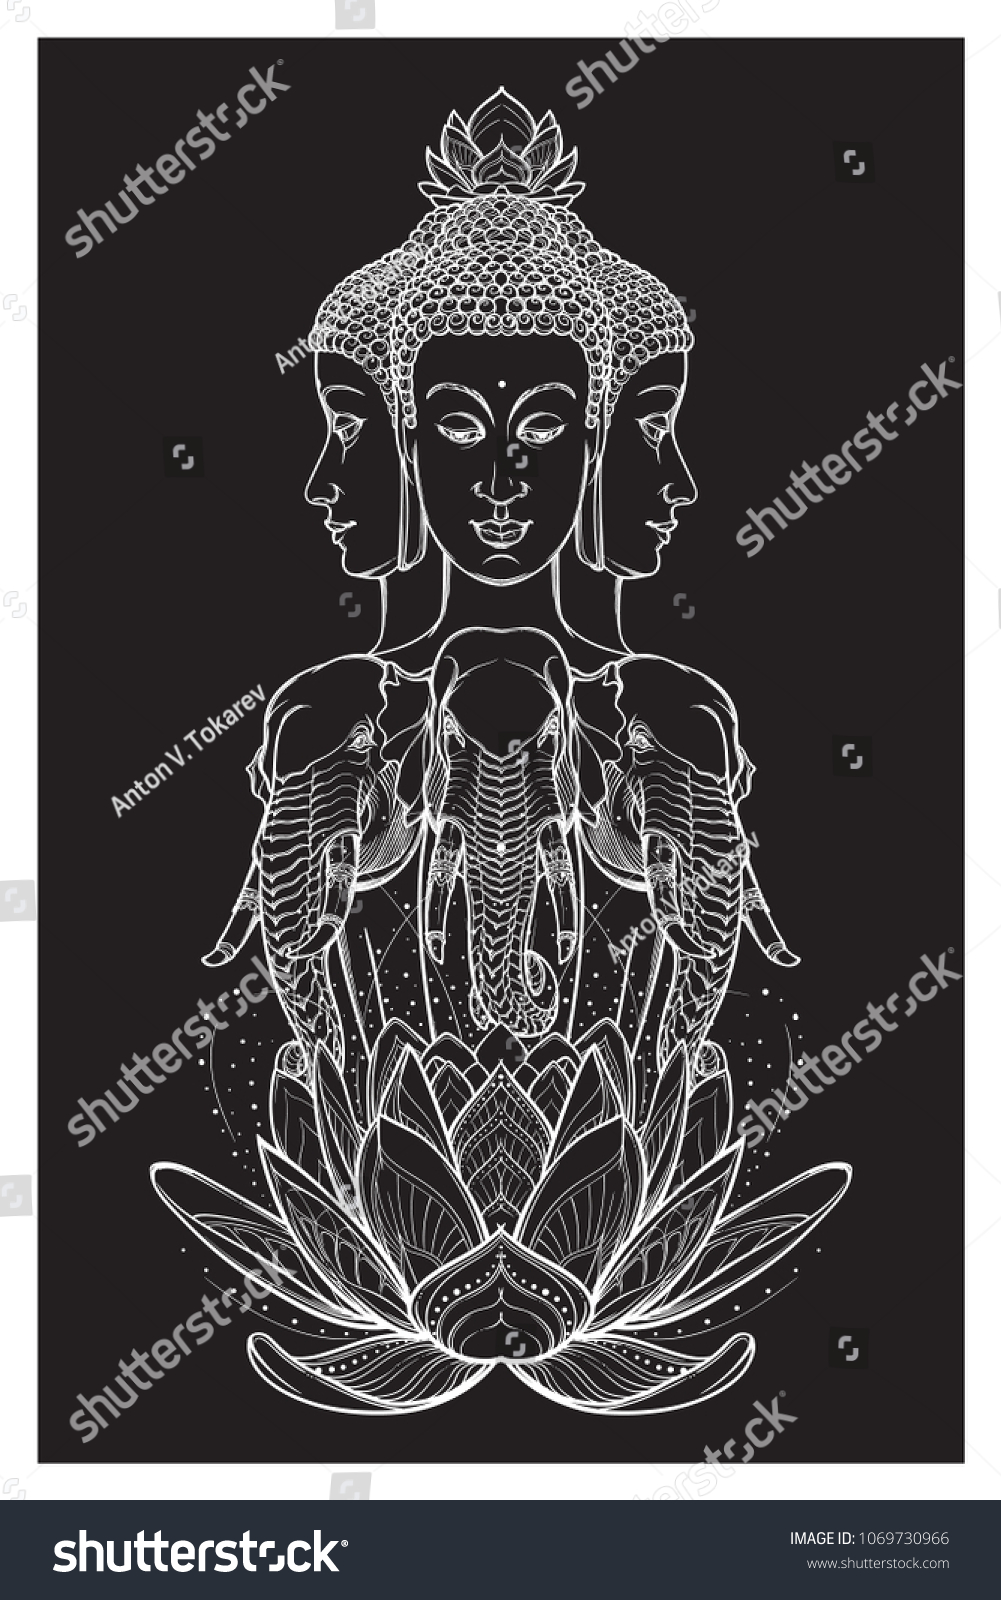 SVG of Statue representing Trimurti - trinity of Hindu gods Brahma, Vishnu and Shiva, sitting on three elephants. Intricate hand drawing isolated on black background. Tattoo design. EPS10 vector svg